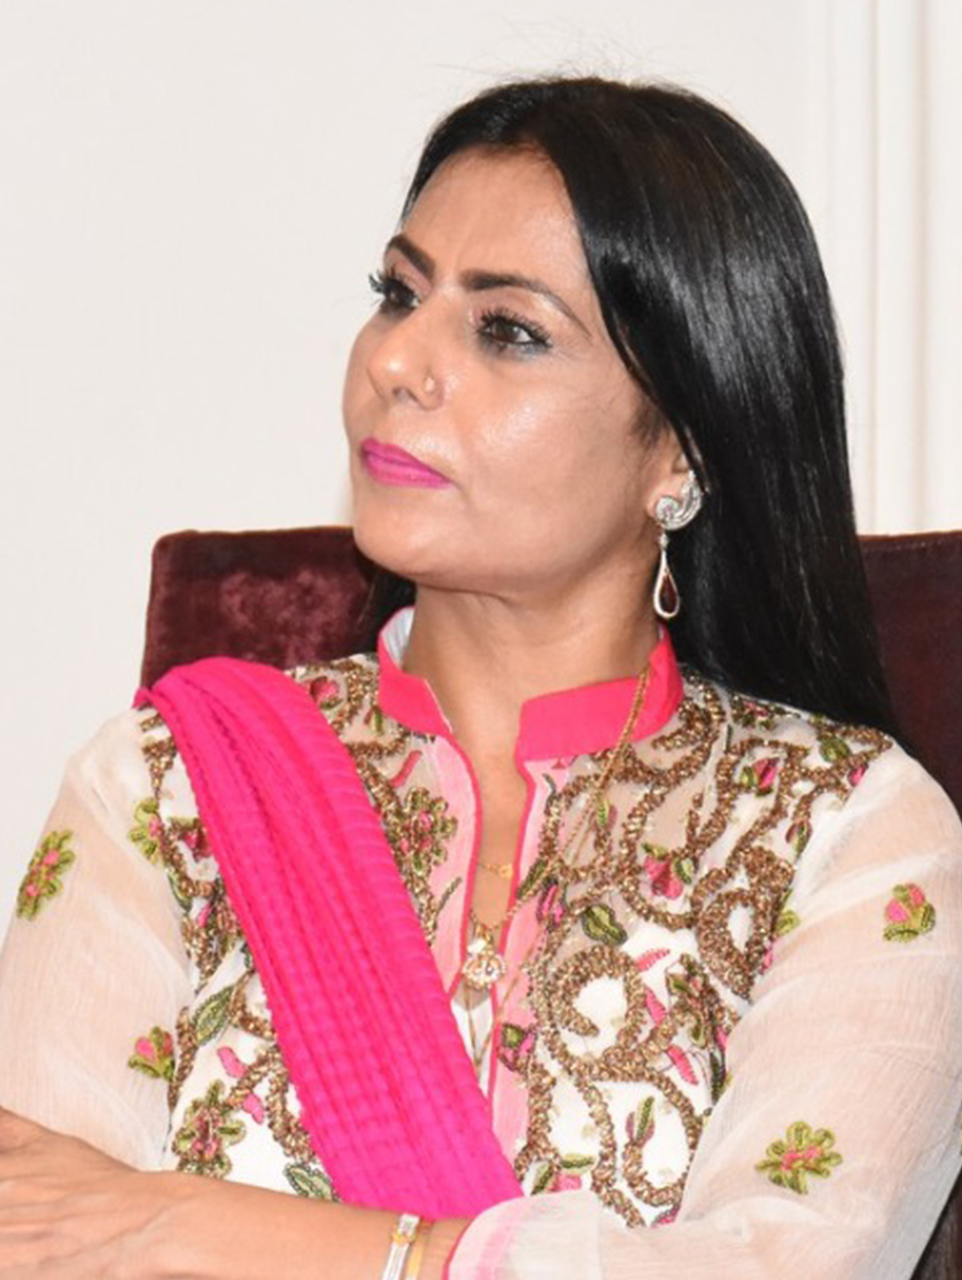 Sabeen Saif